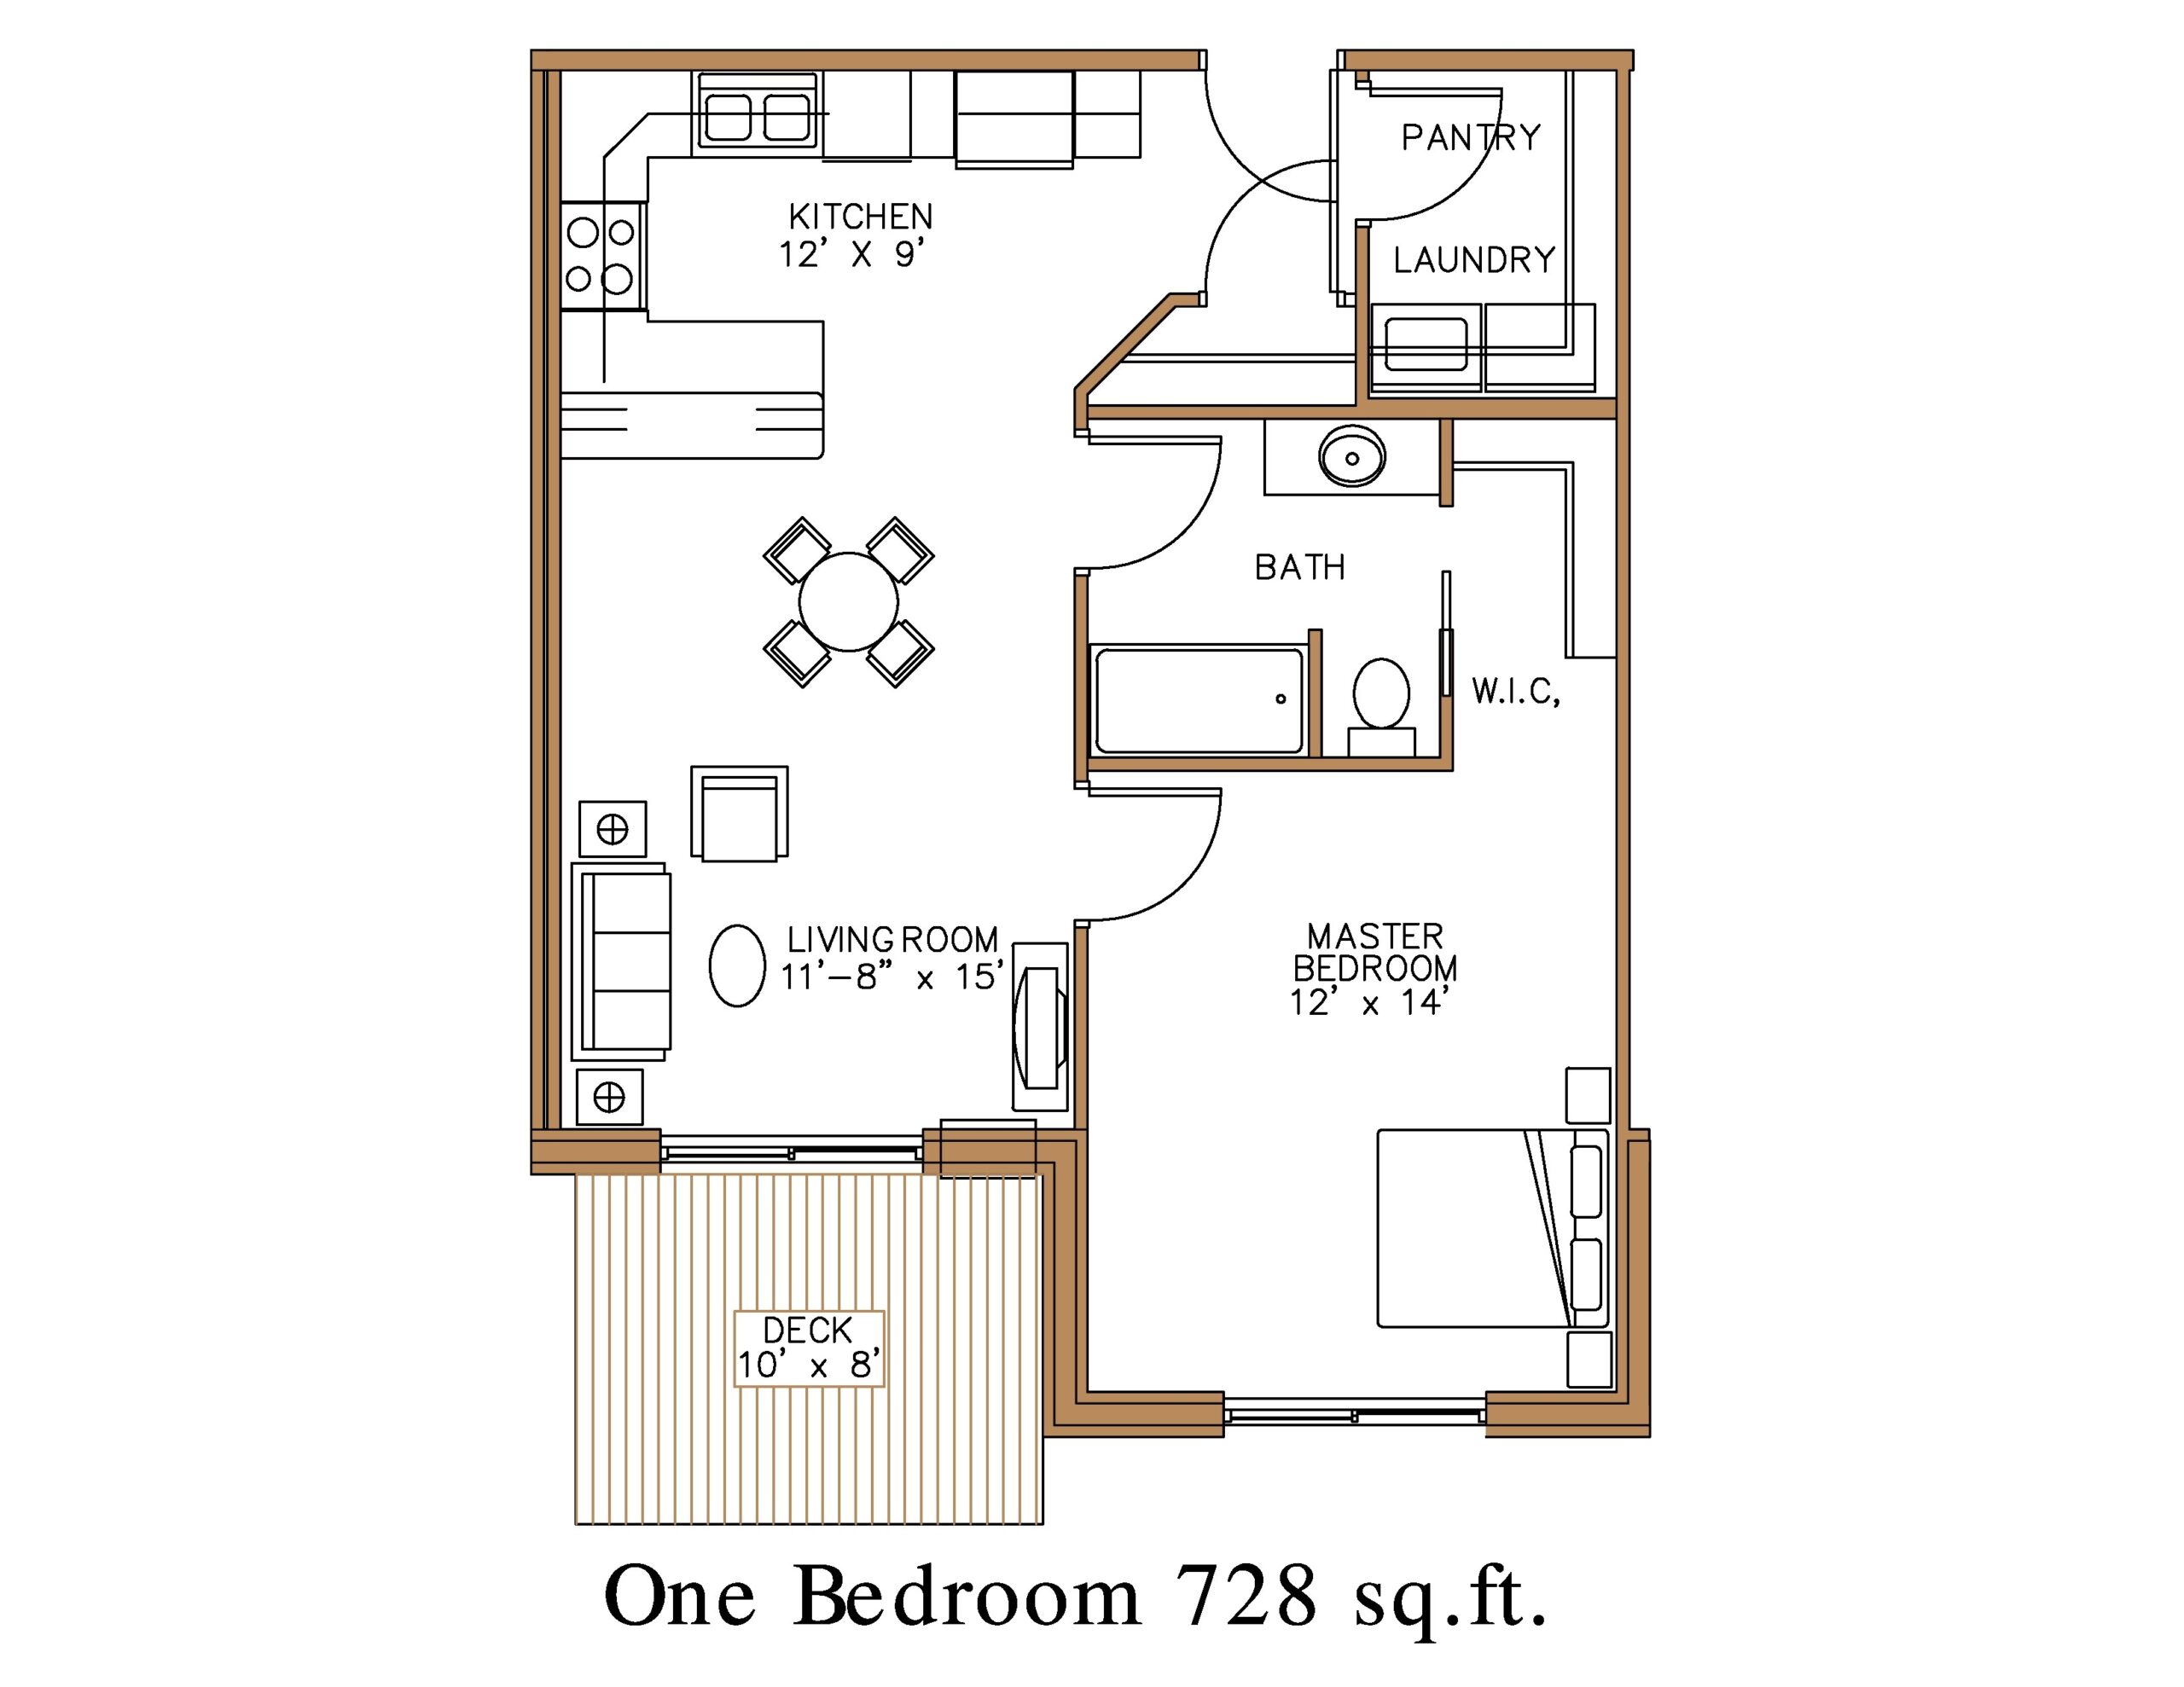 Fantastic floor plan at northview apartment homes in detroit lakes | great north regarding wonderful room design floor plan